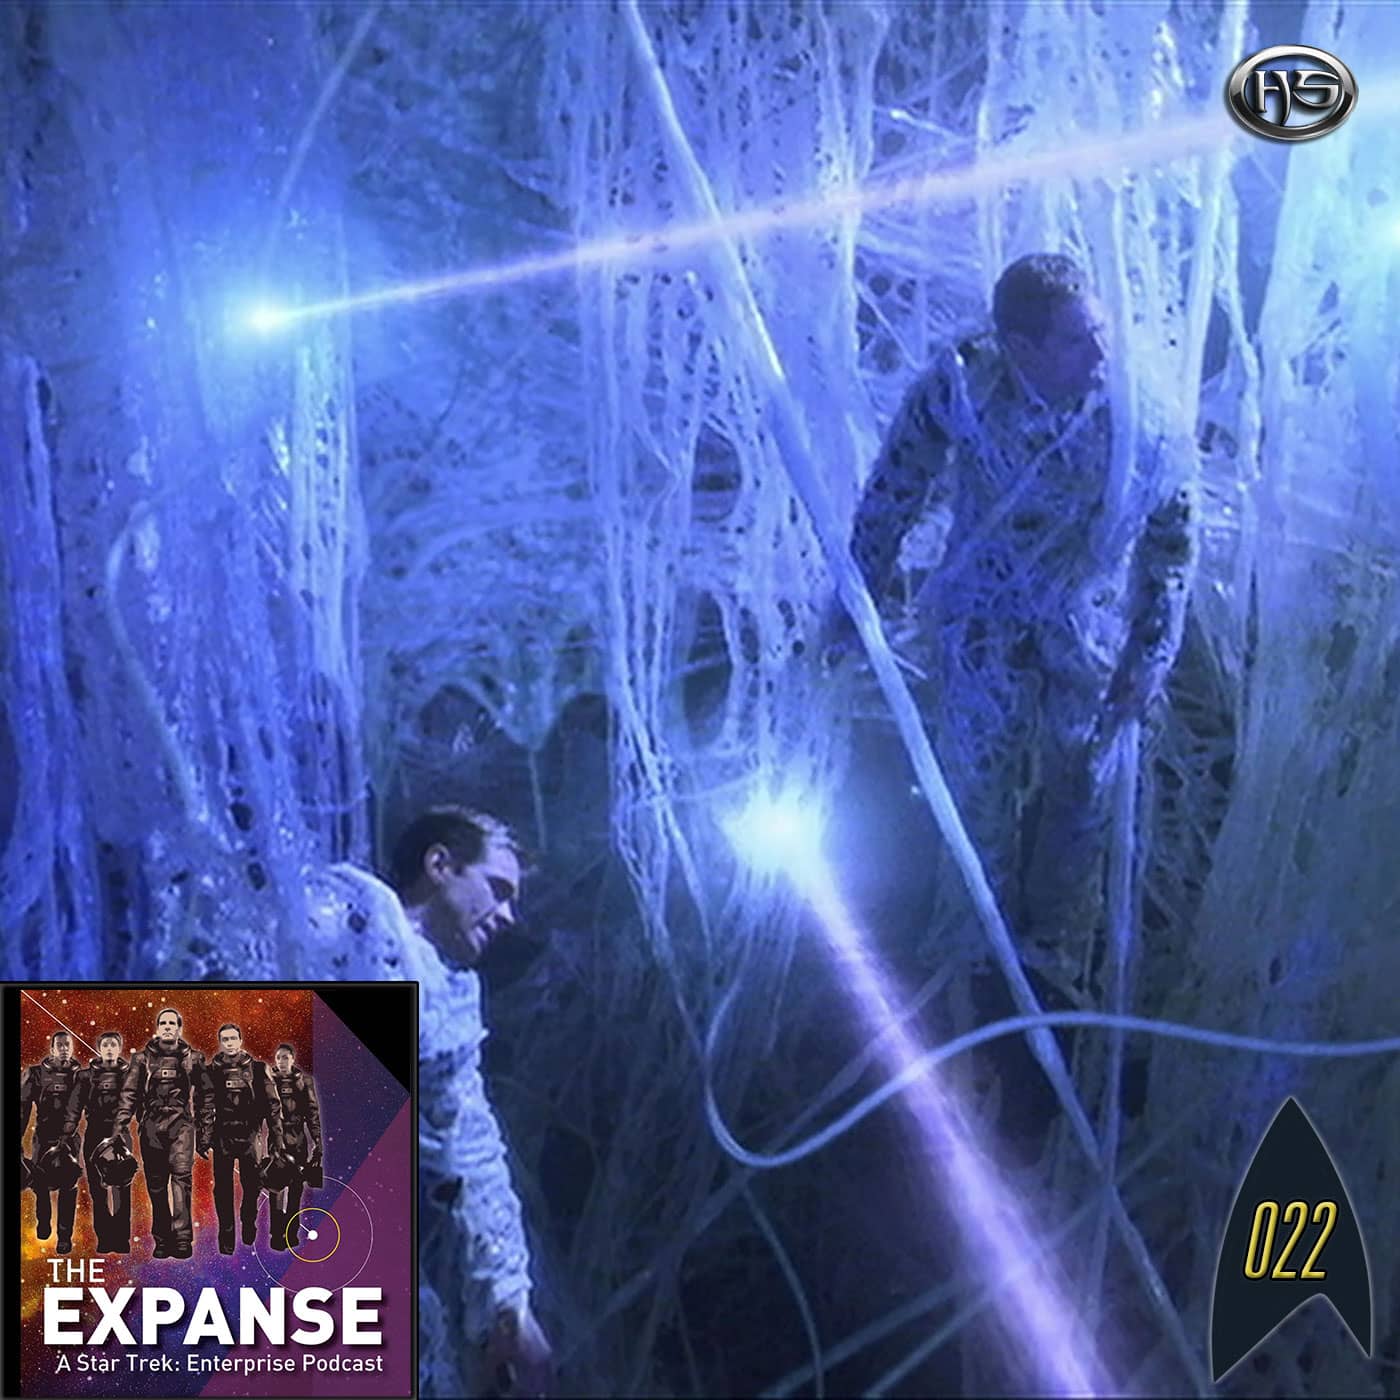 The Expanse Episode 22